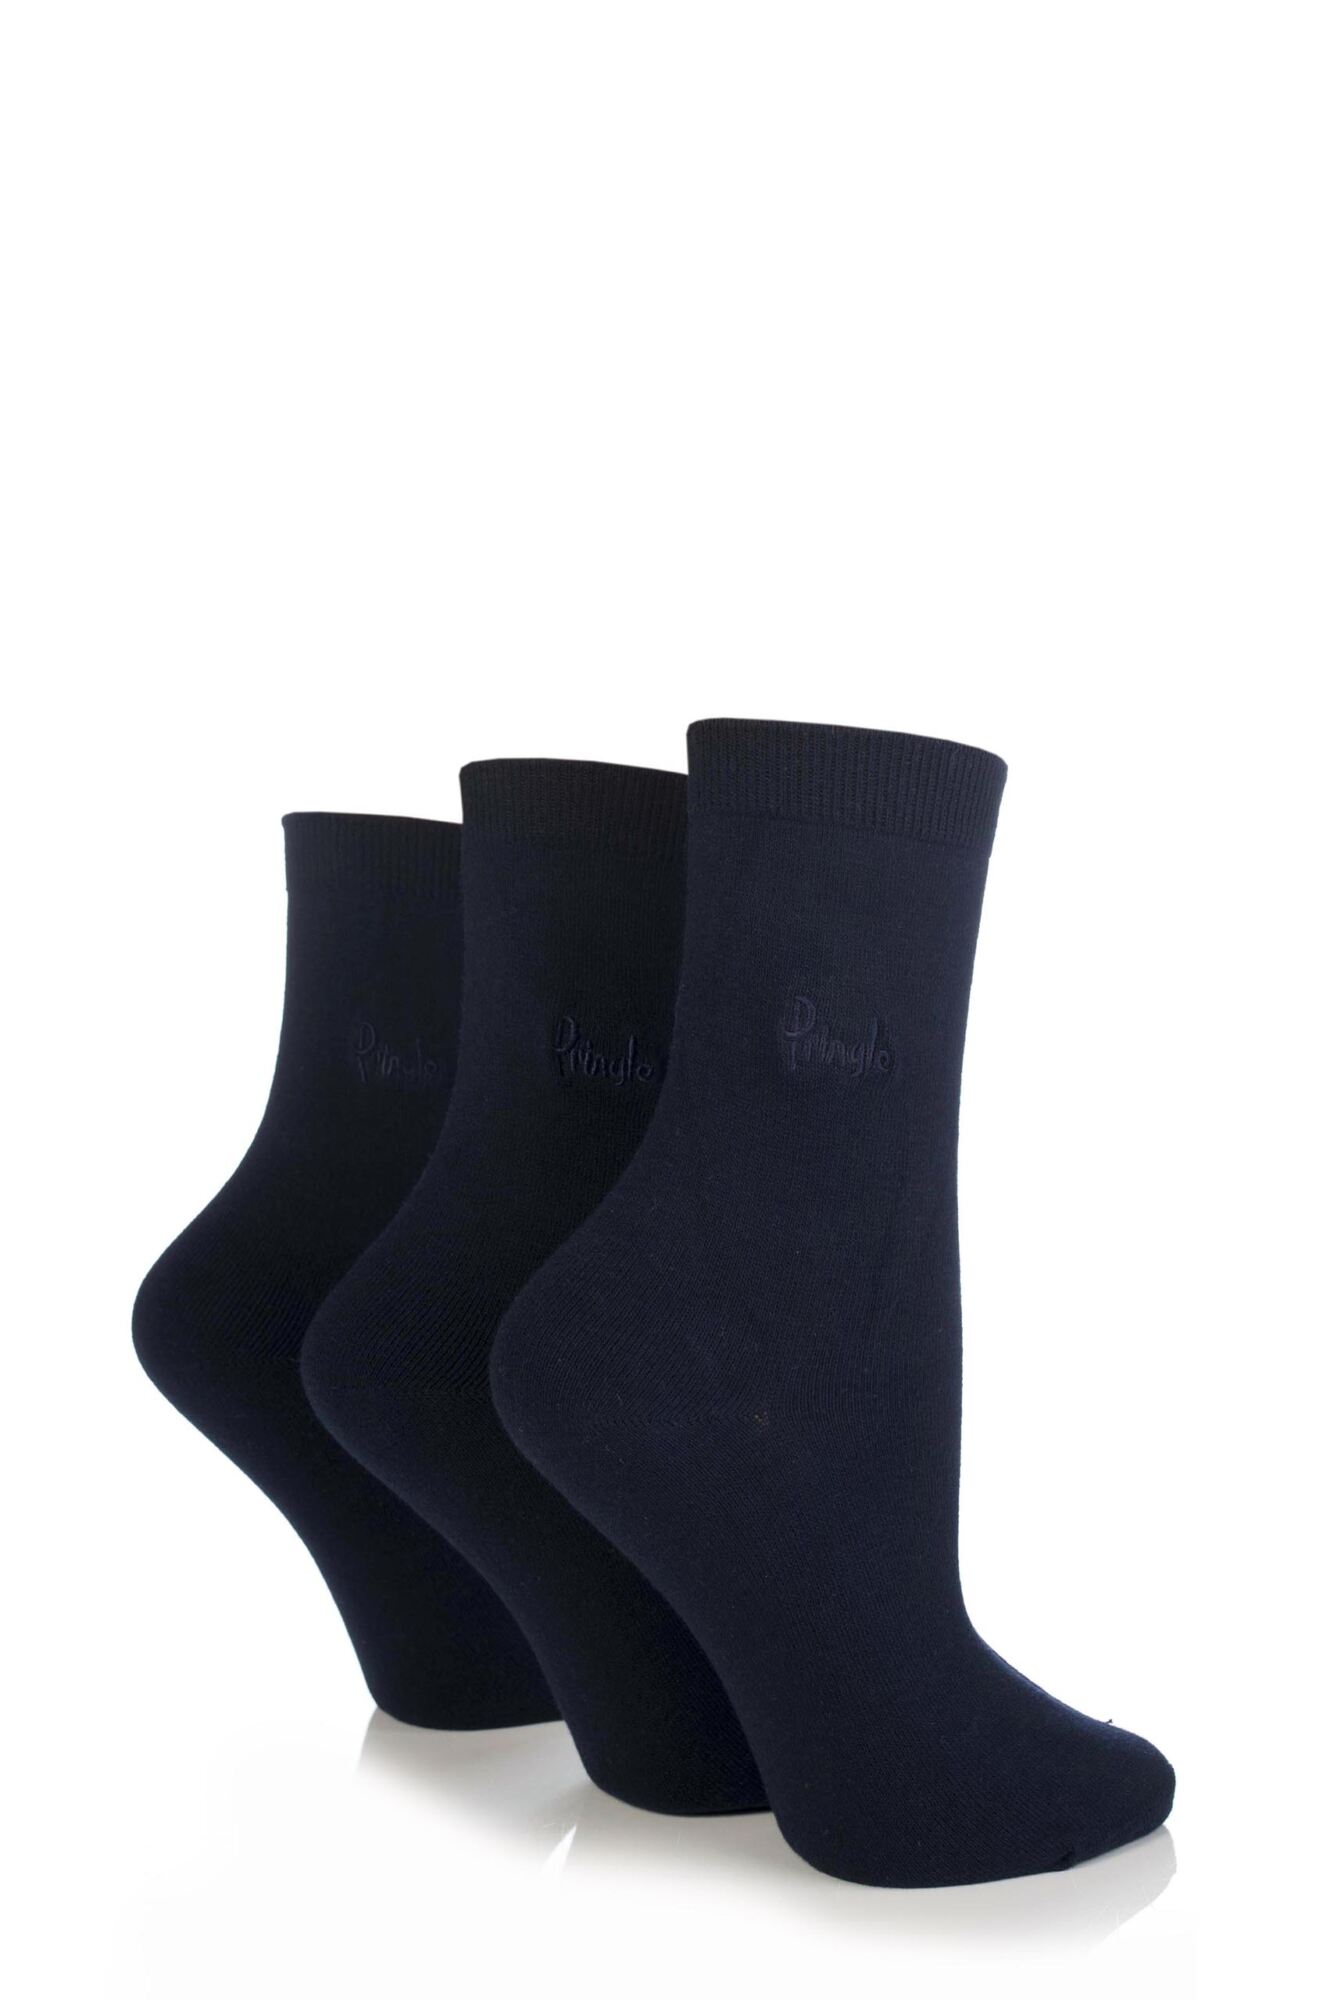 Ladies Pringle Tiffany Plain Trouser Socks | SOCKSHOP